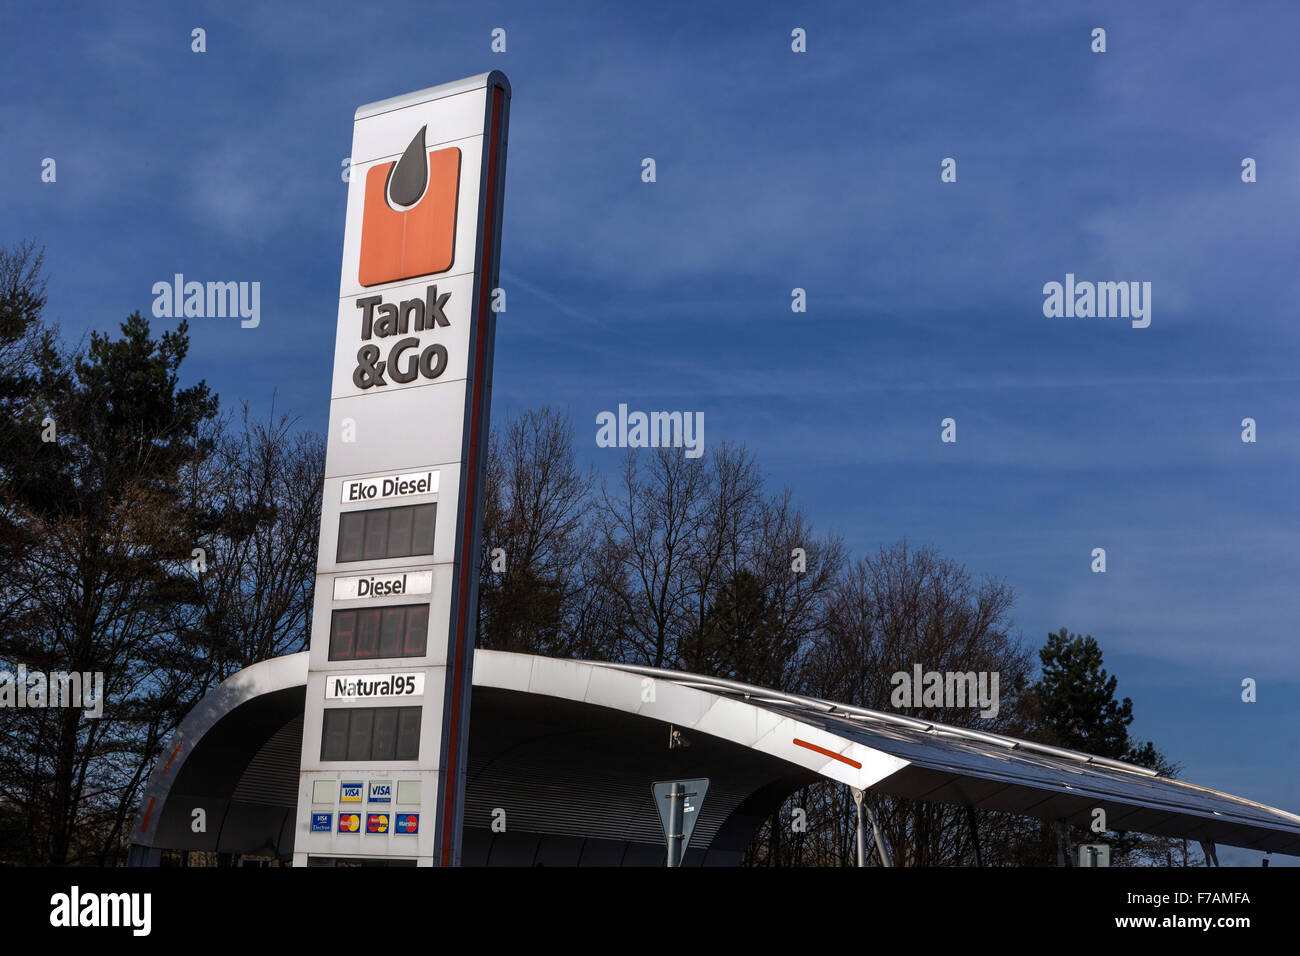 Tank & Go self-service petrol station sign, Czech Republic Stock Photo